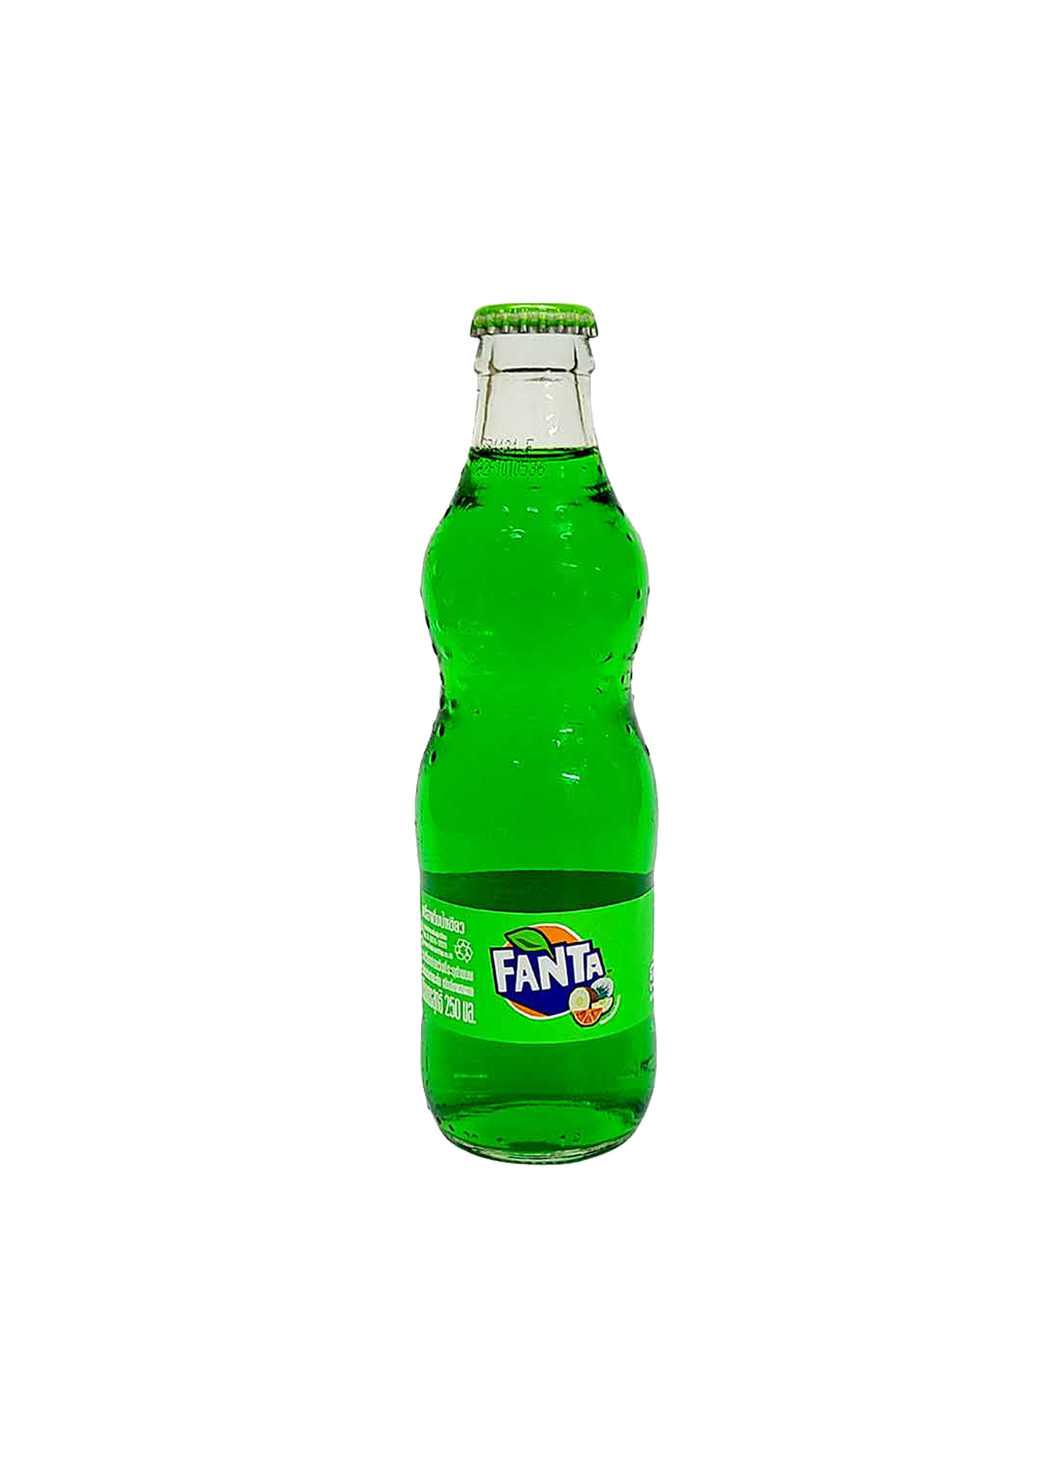 Fanta Fruit Punch (Green) glass bottle 250ml